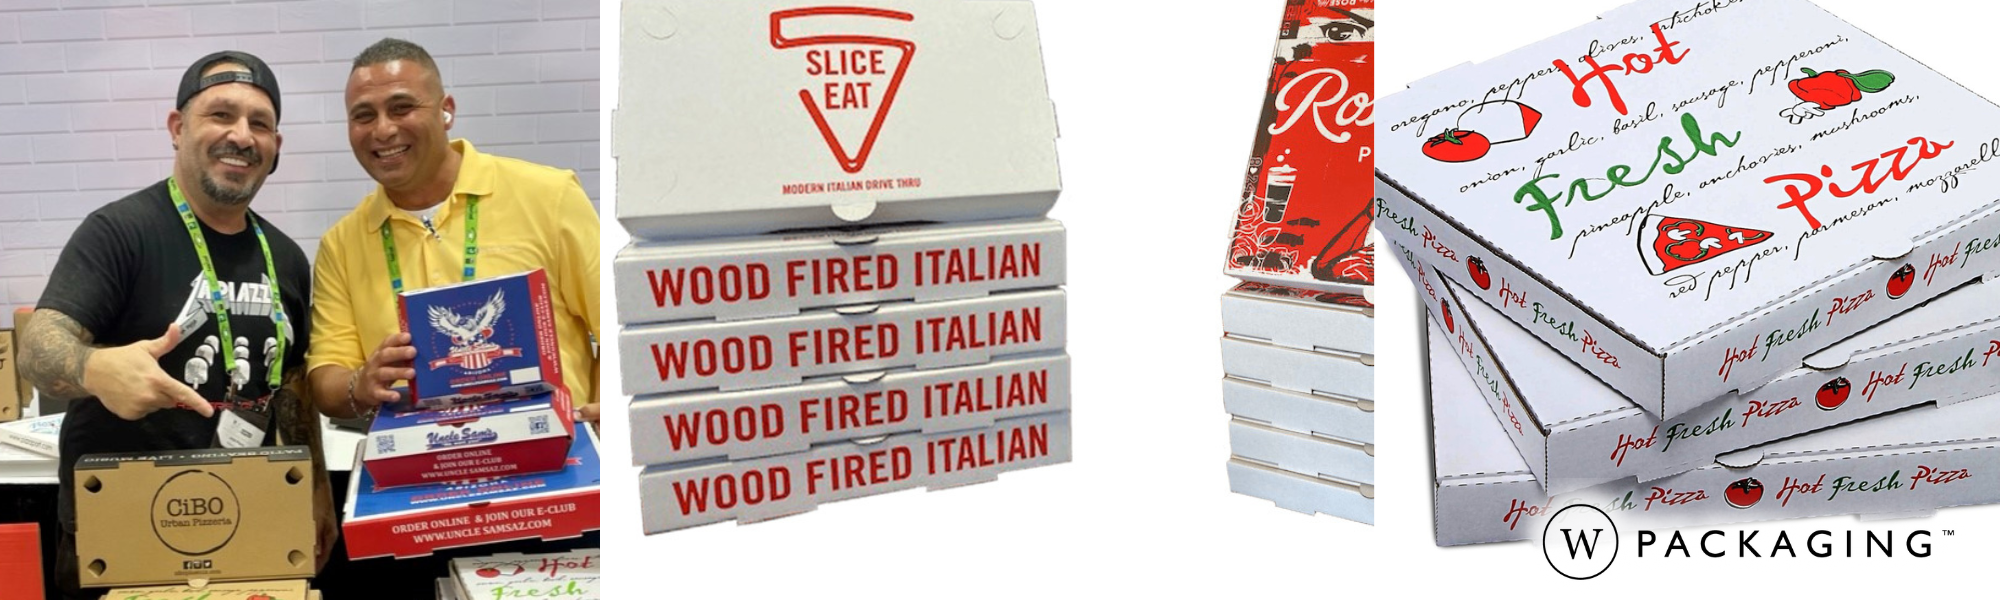 Pizza Box Tops: Efficient Advertising That Won't Break Your Plan